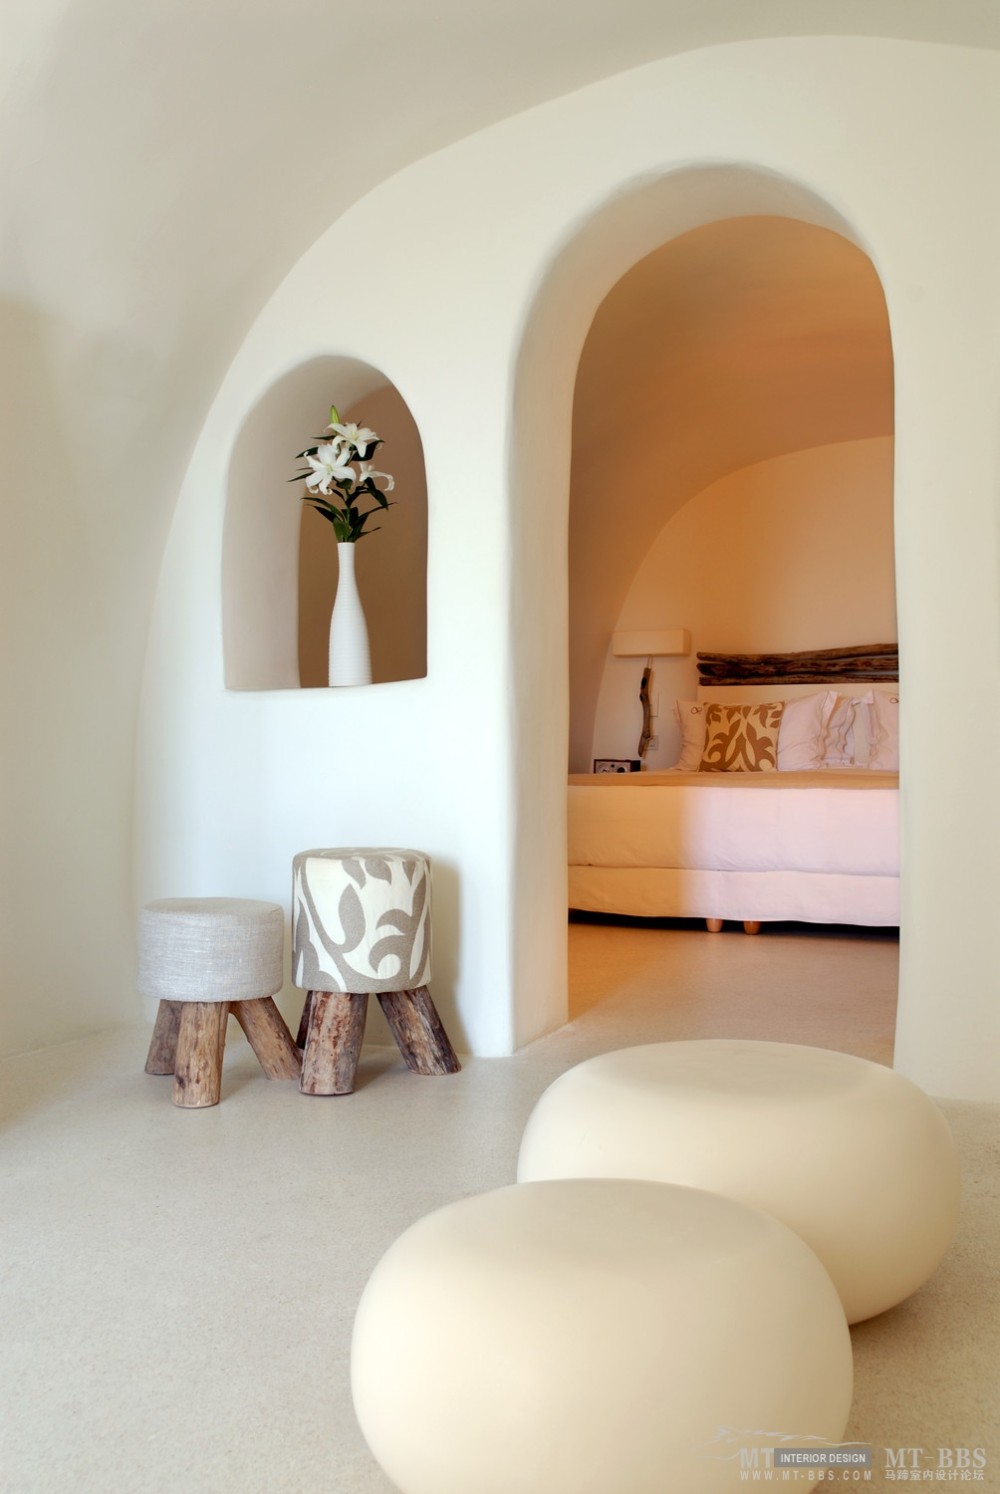 全球豪华精选至尊酒店合集The Luxury Collection(已补齐)_23)Mystique, Santorini—Allure Suite Bedroom and sitting area 拍攝者 Luxury Coll.jpg